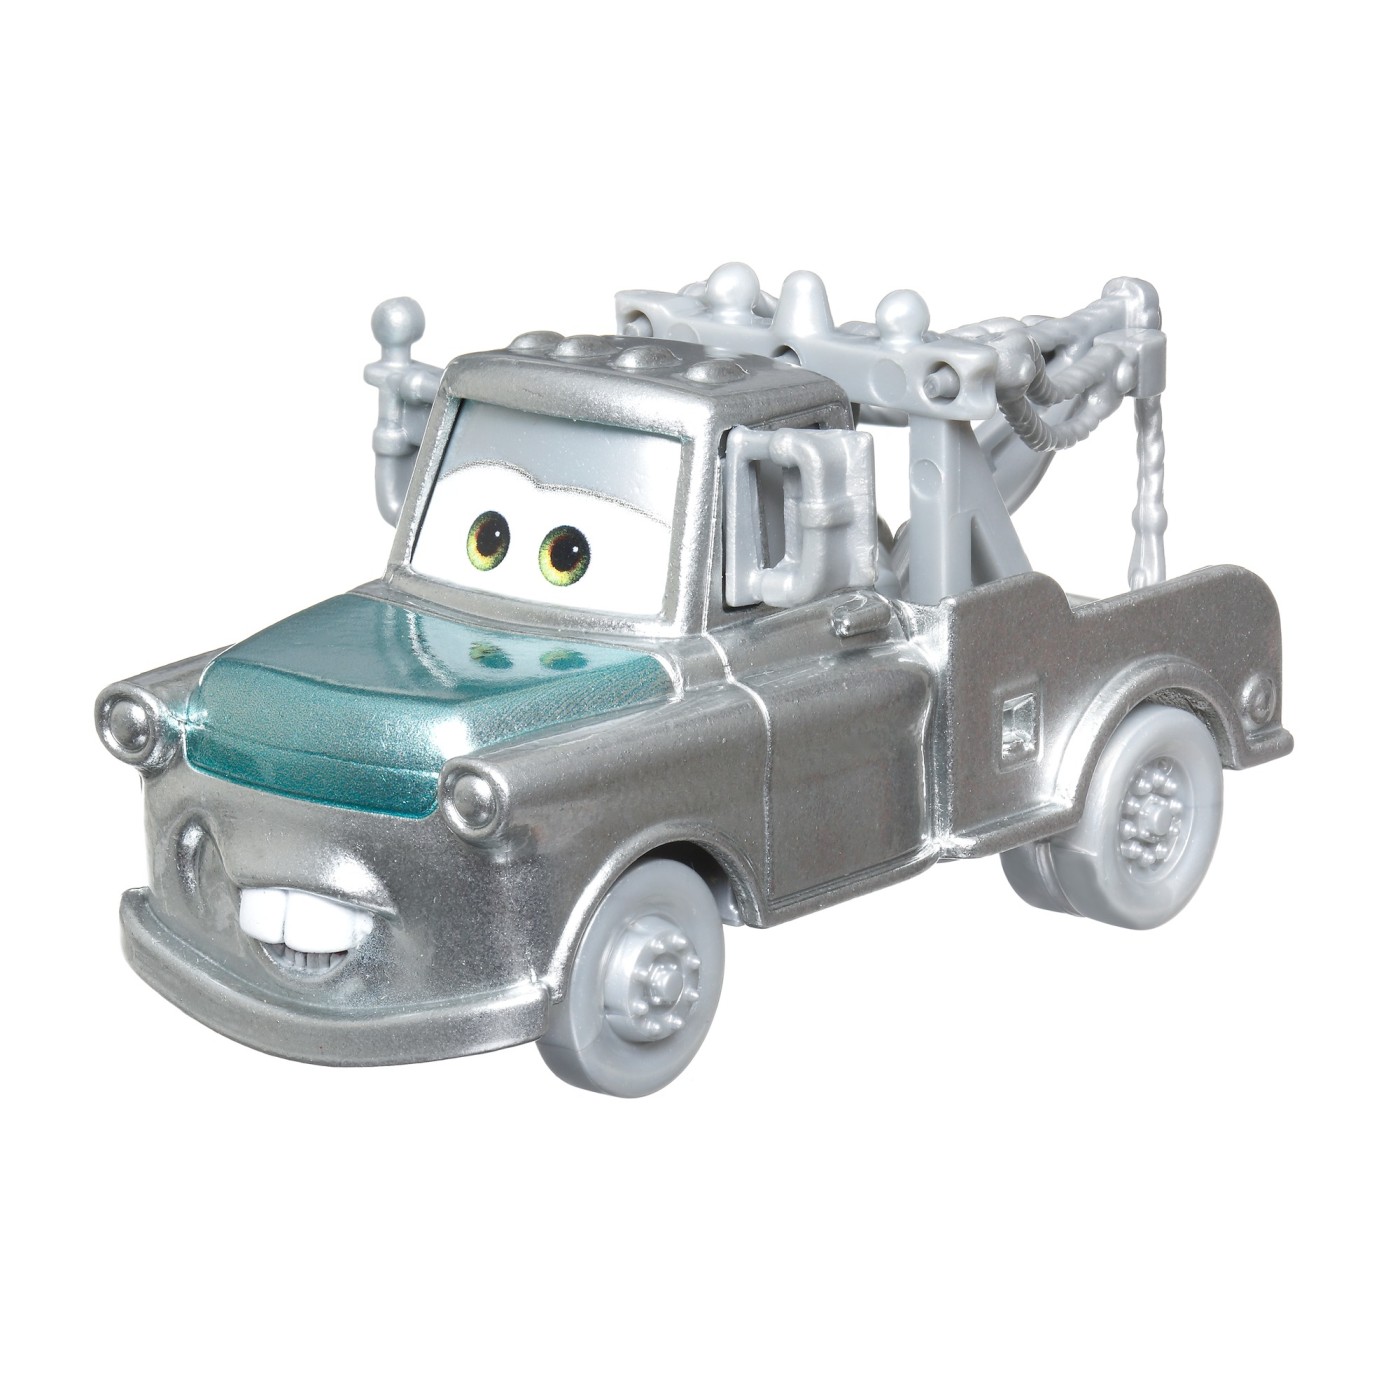 Masinuta - Disney Cars - Disney 100: Mater | Mattel